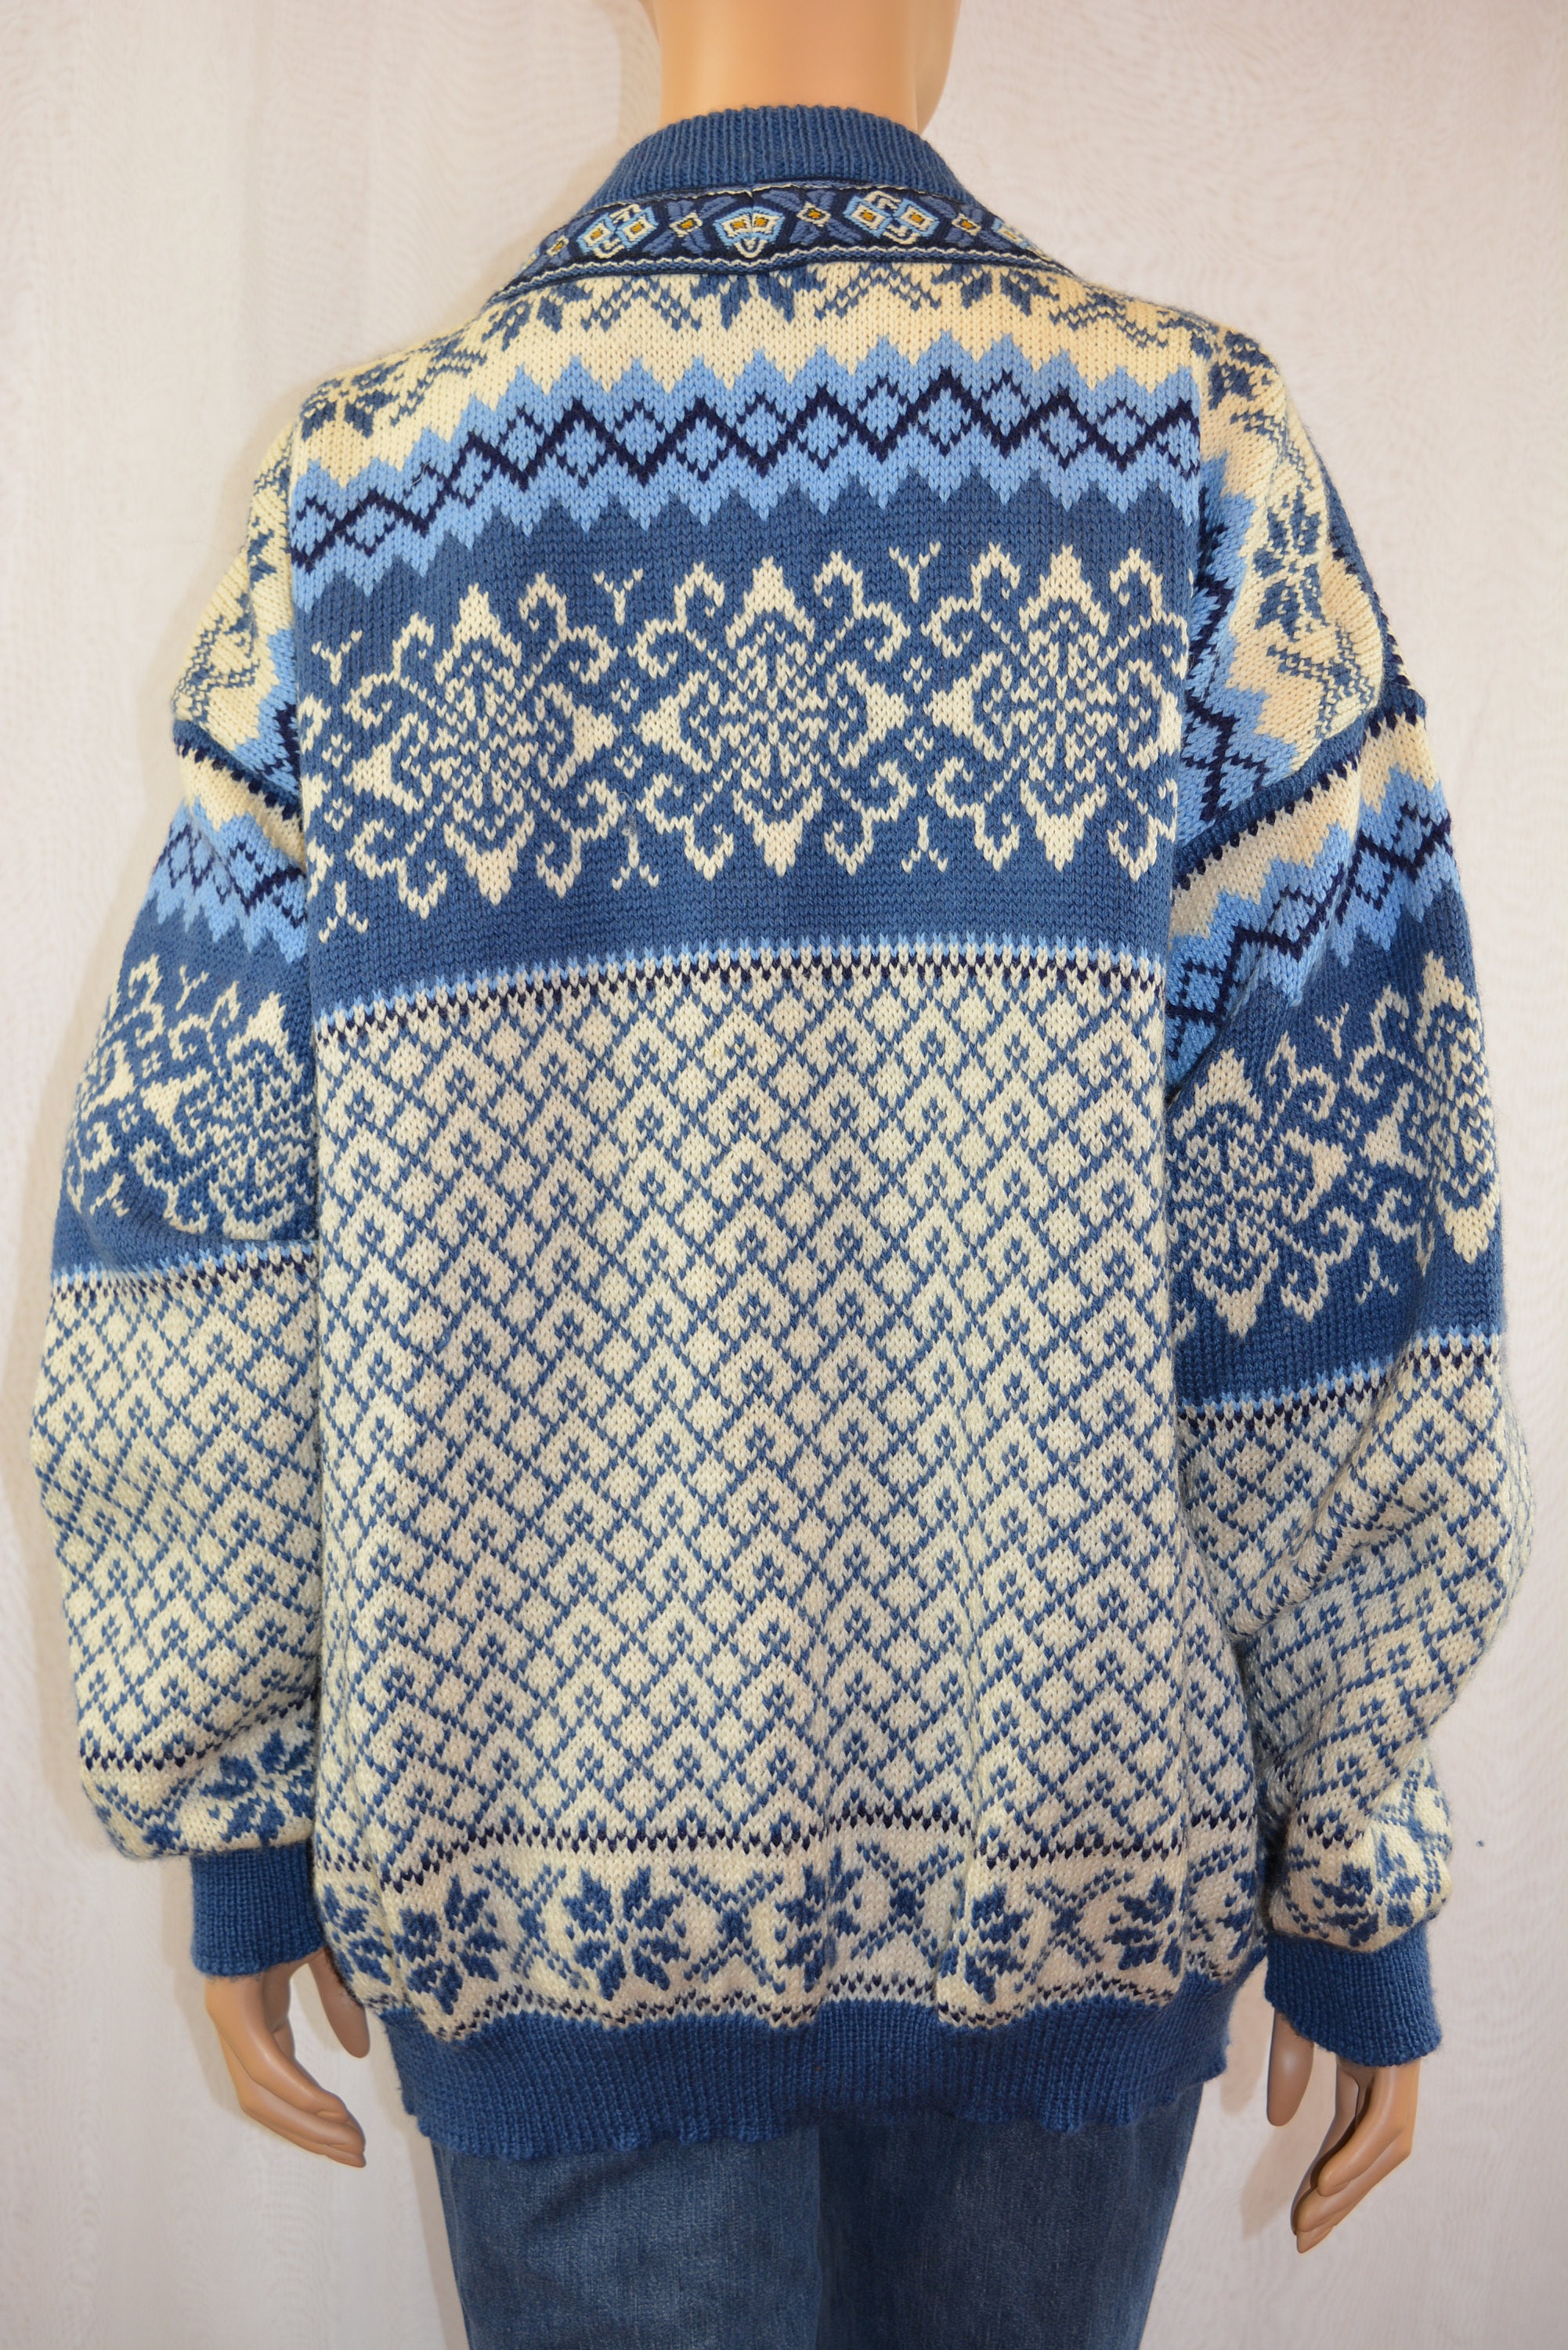 Wool vintage sweater Norwegian bunad Fair isle cardigan | Etsy